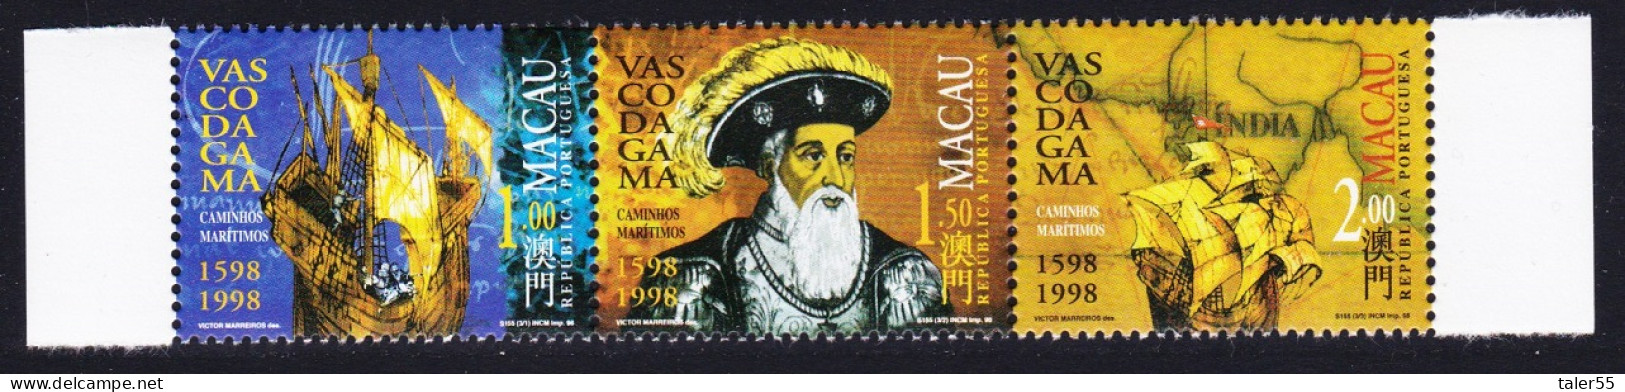 Macao Macau Vasco Da Gama ERROR '1598' Strip Of 3v 1998 MNH SG#1040-1042 Sc#926-928 - Ongebruikt